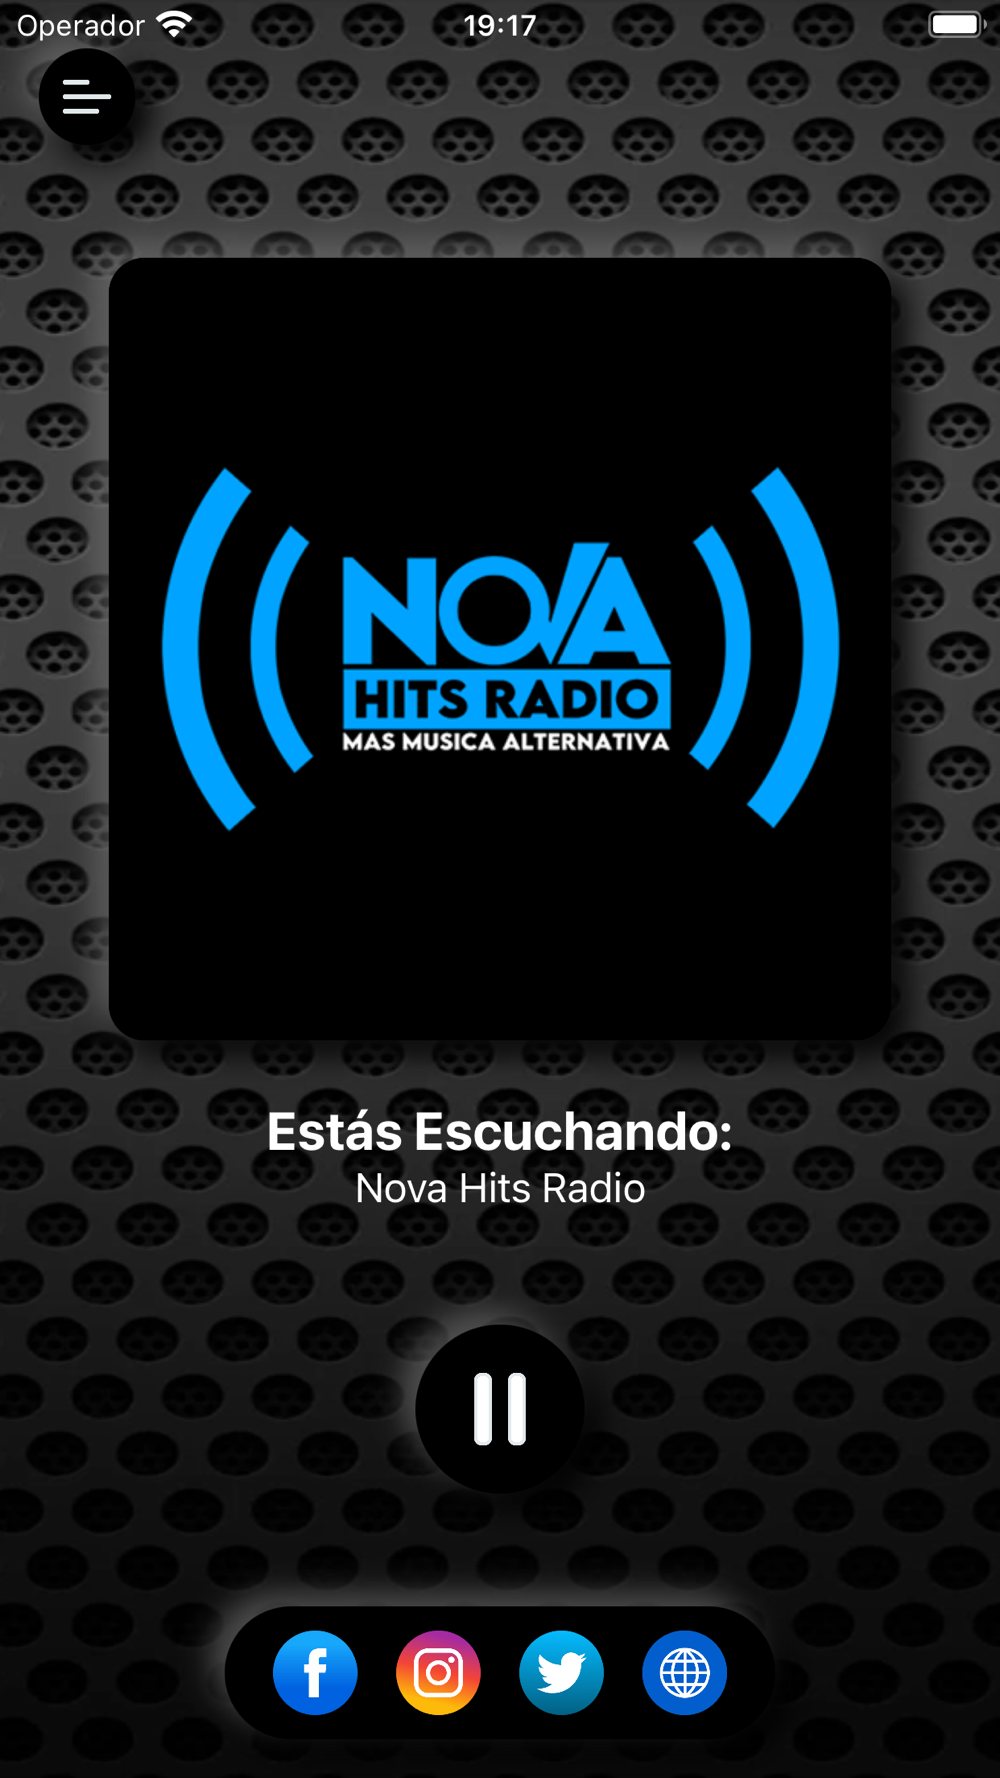 Nova Hits Radio Free Download App for iPhone 